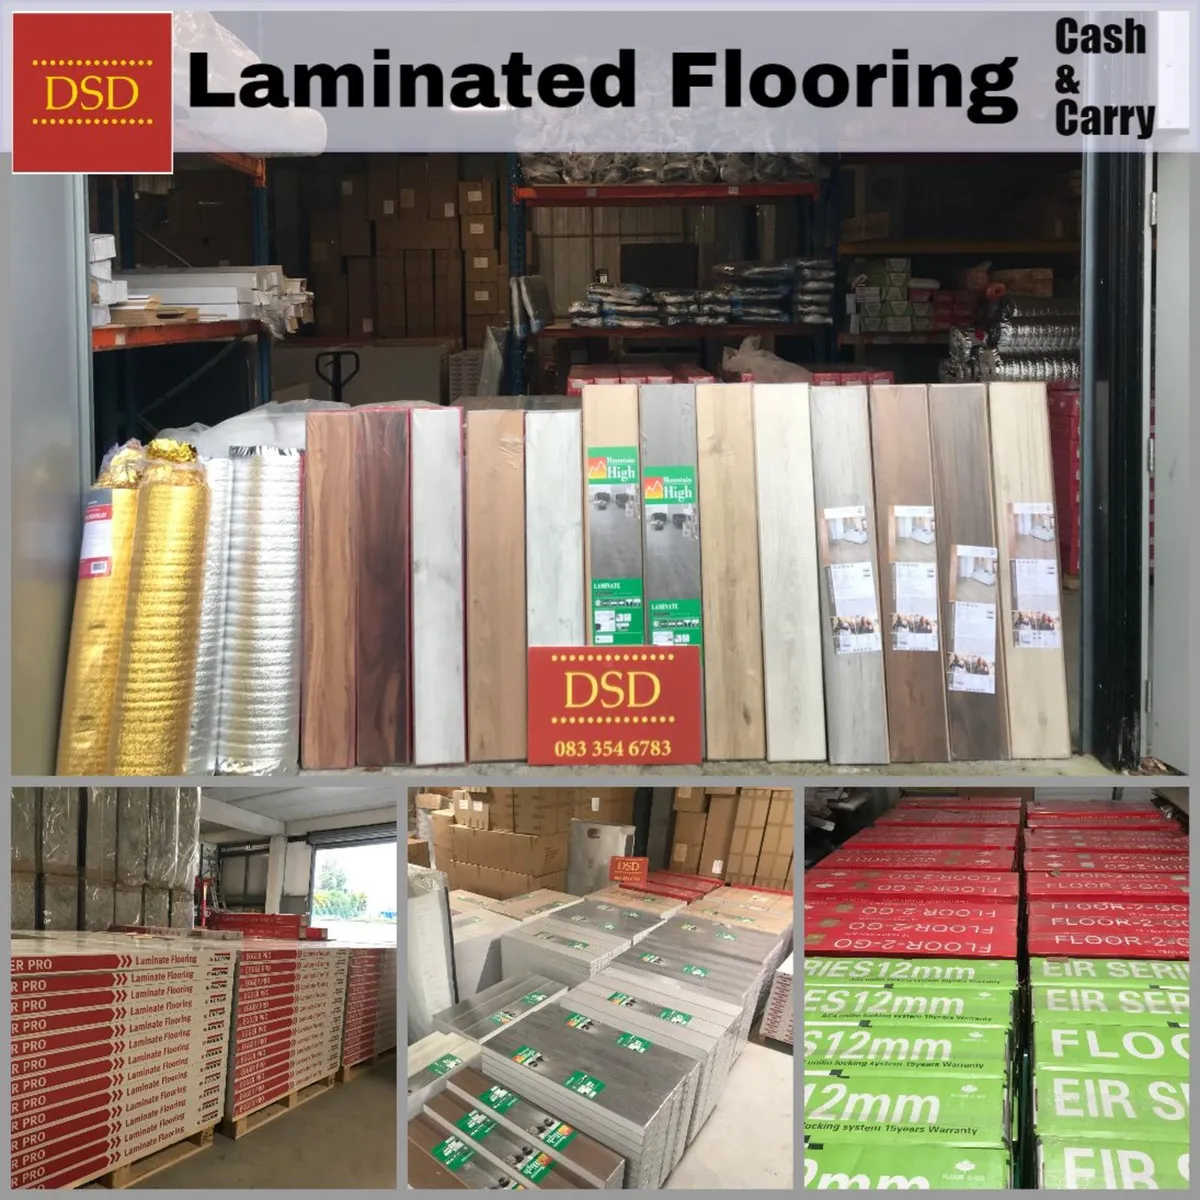 Laminated Flooring Wholesale and Retail - Image 1